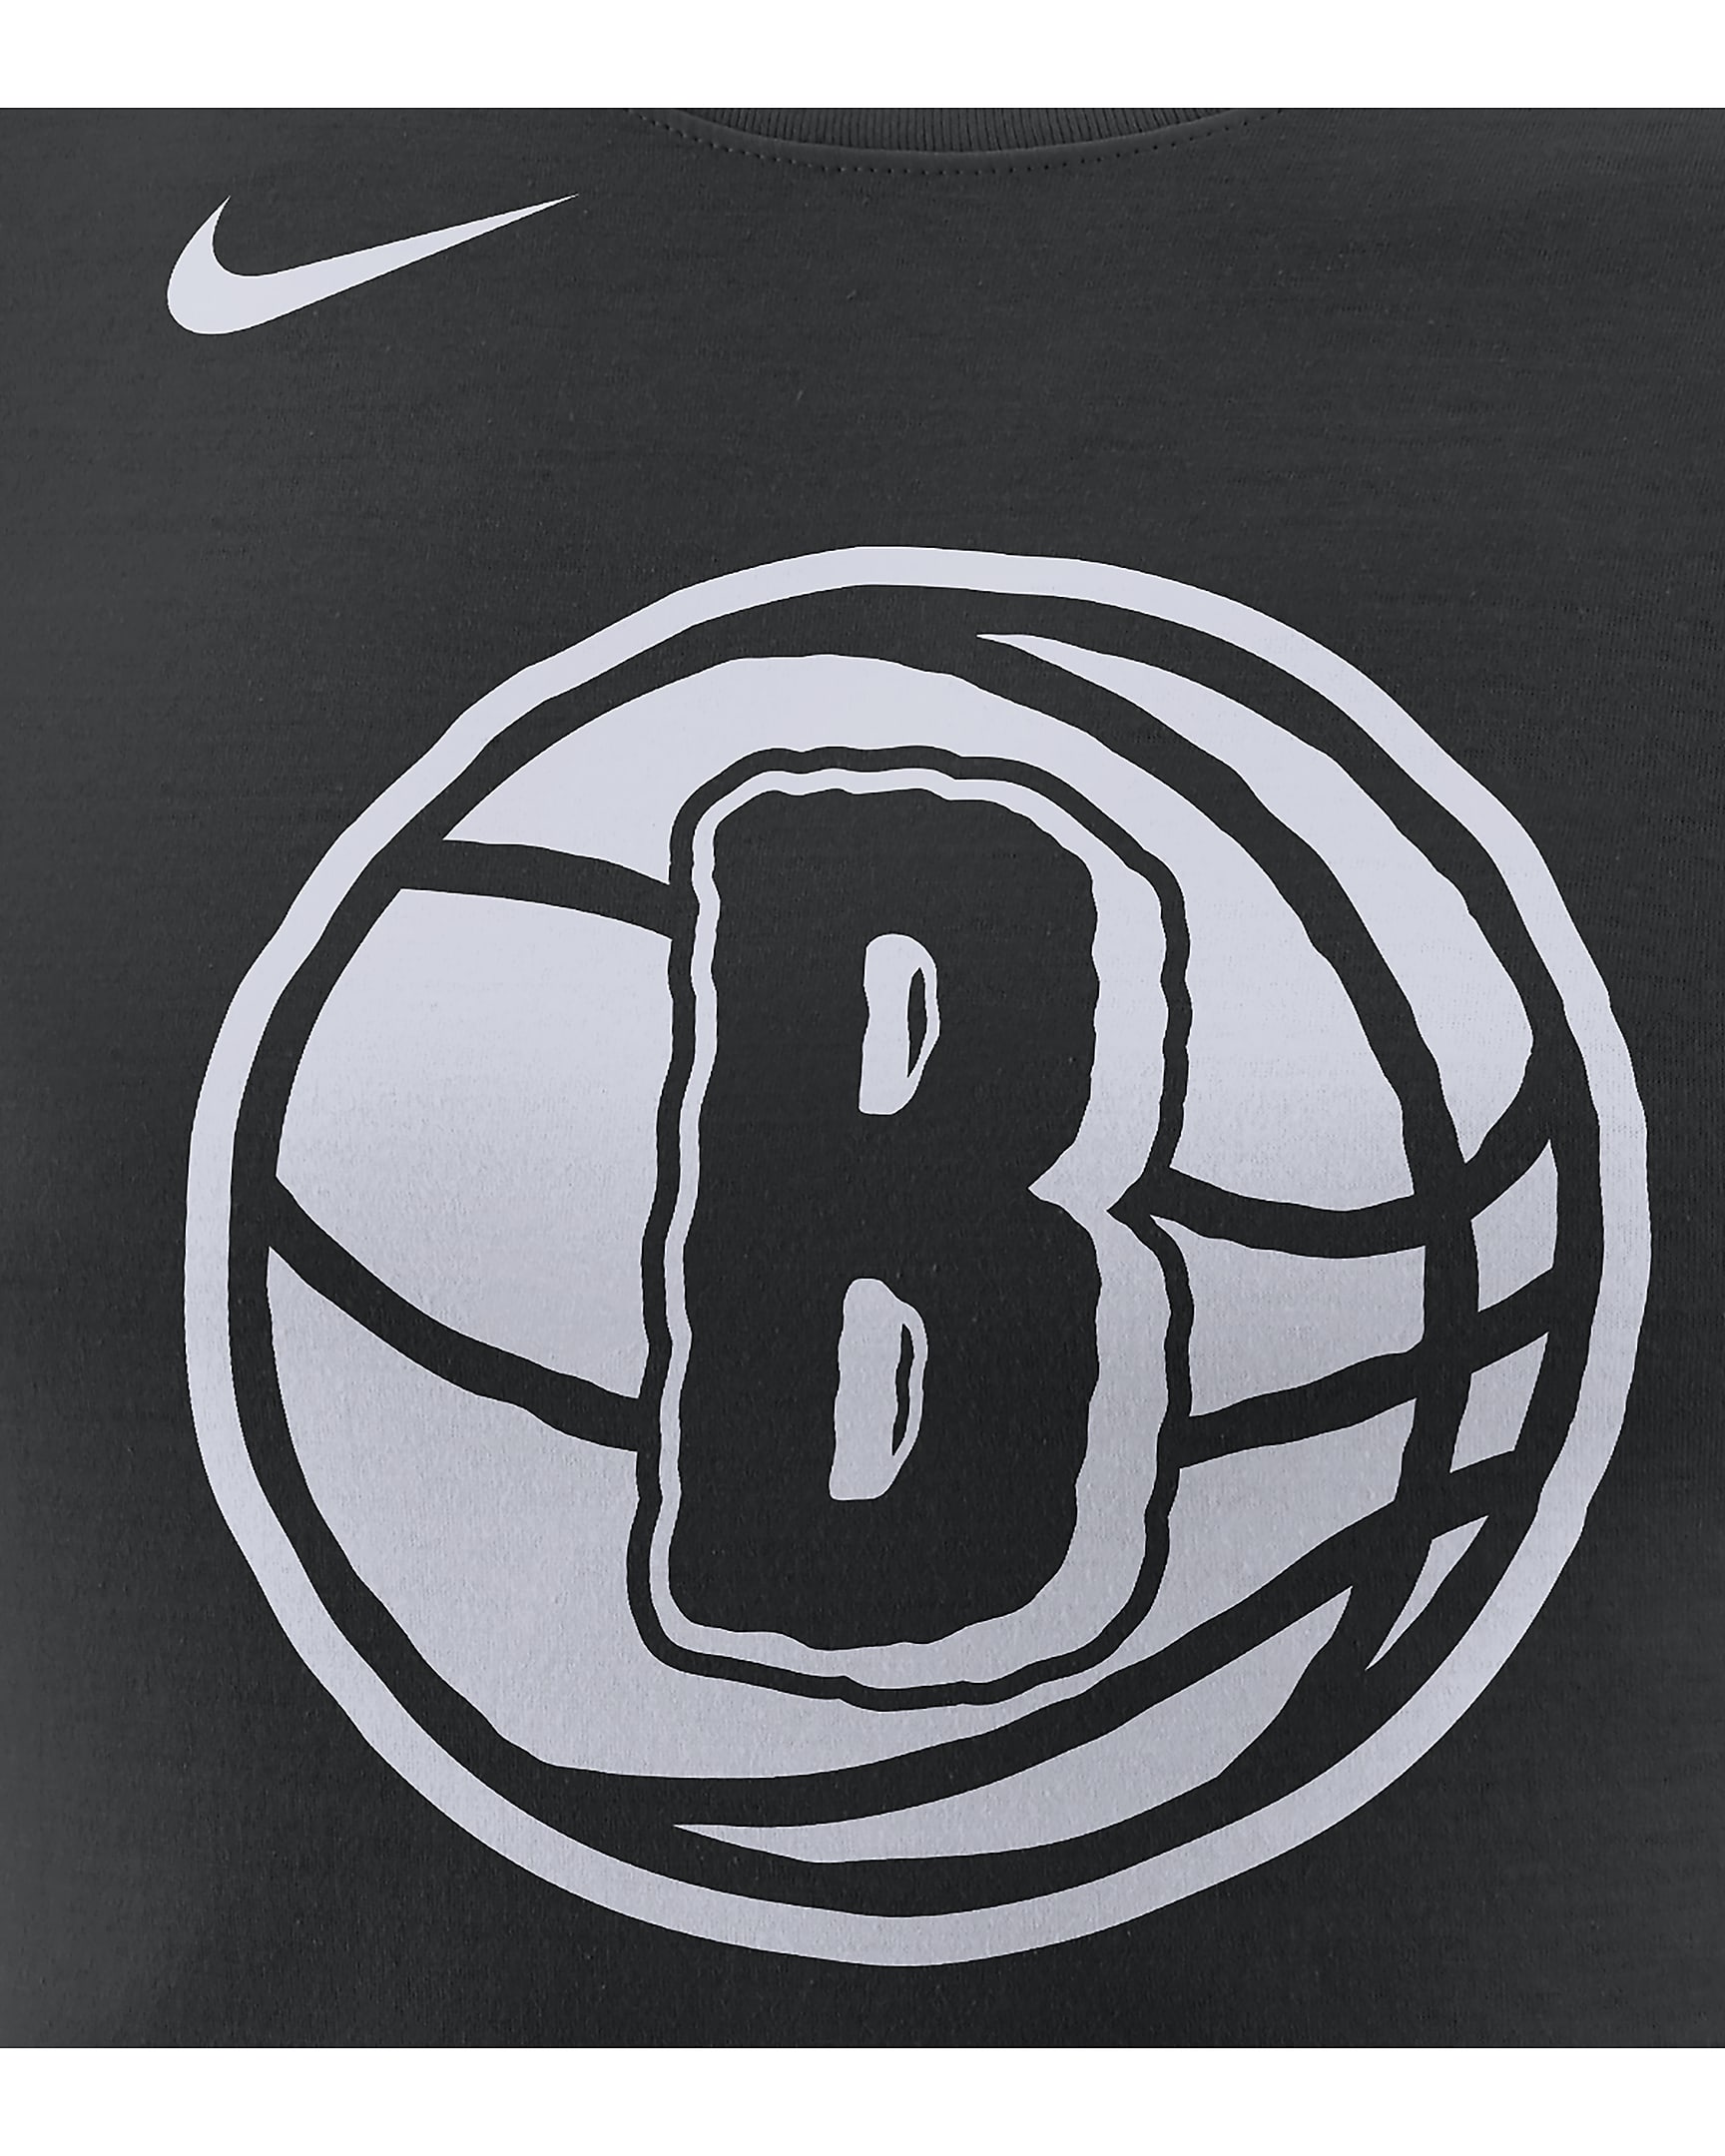 Brooklyn Nets City Edition Men's Nike NBA T-Shirt. Nike.com